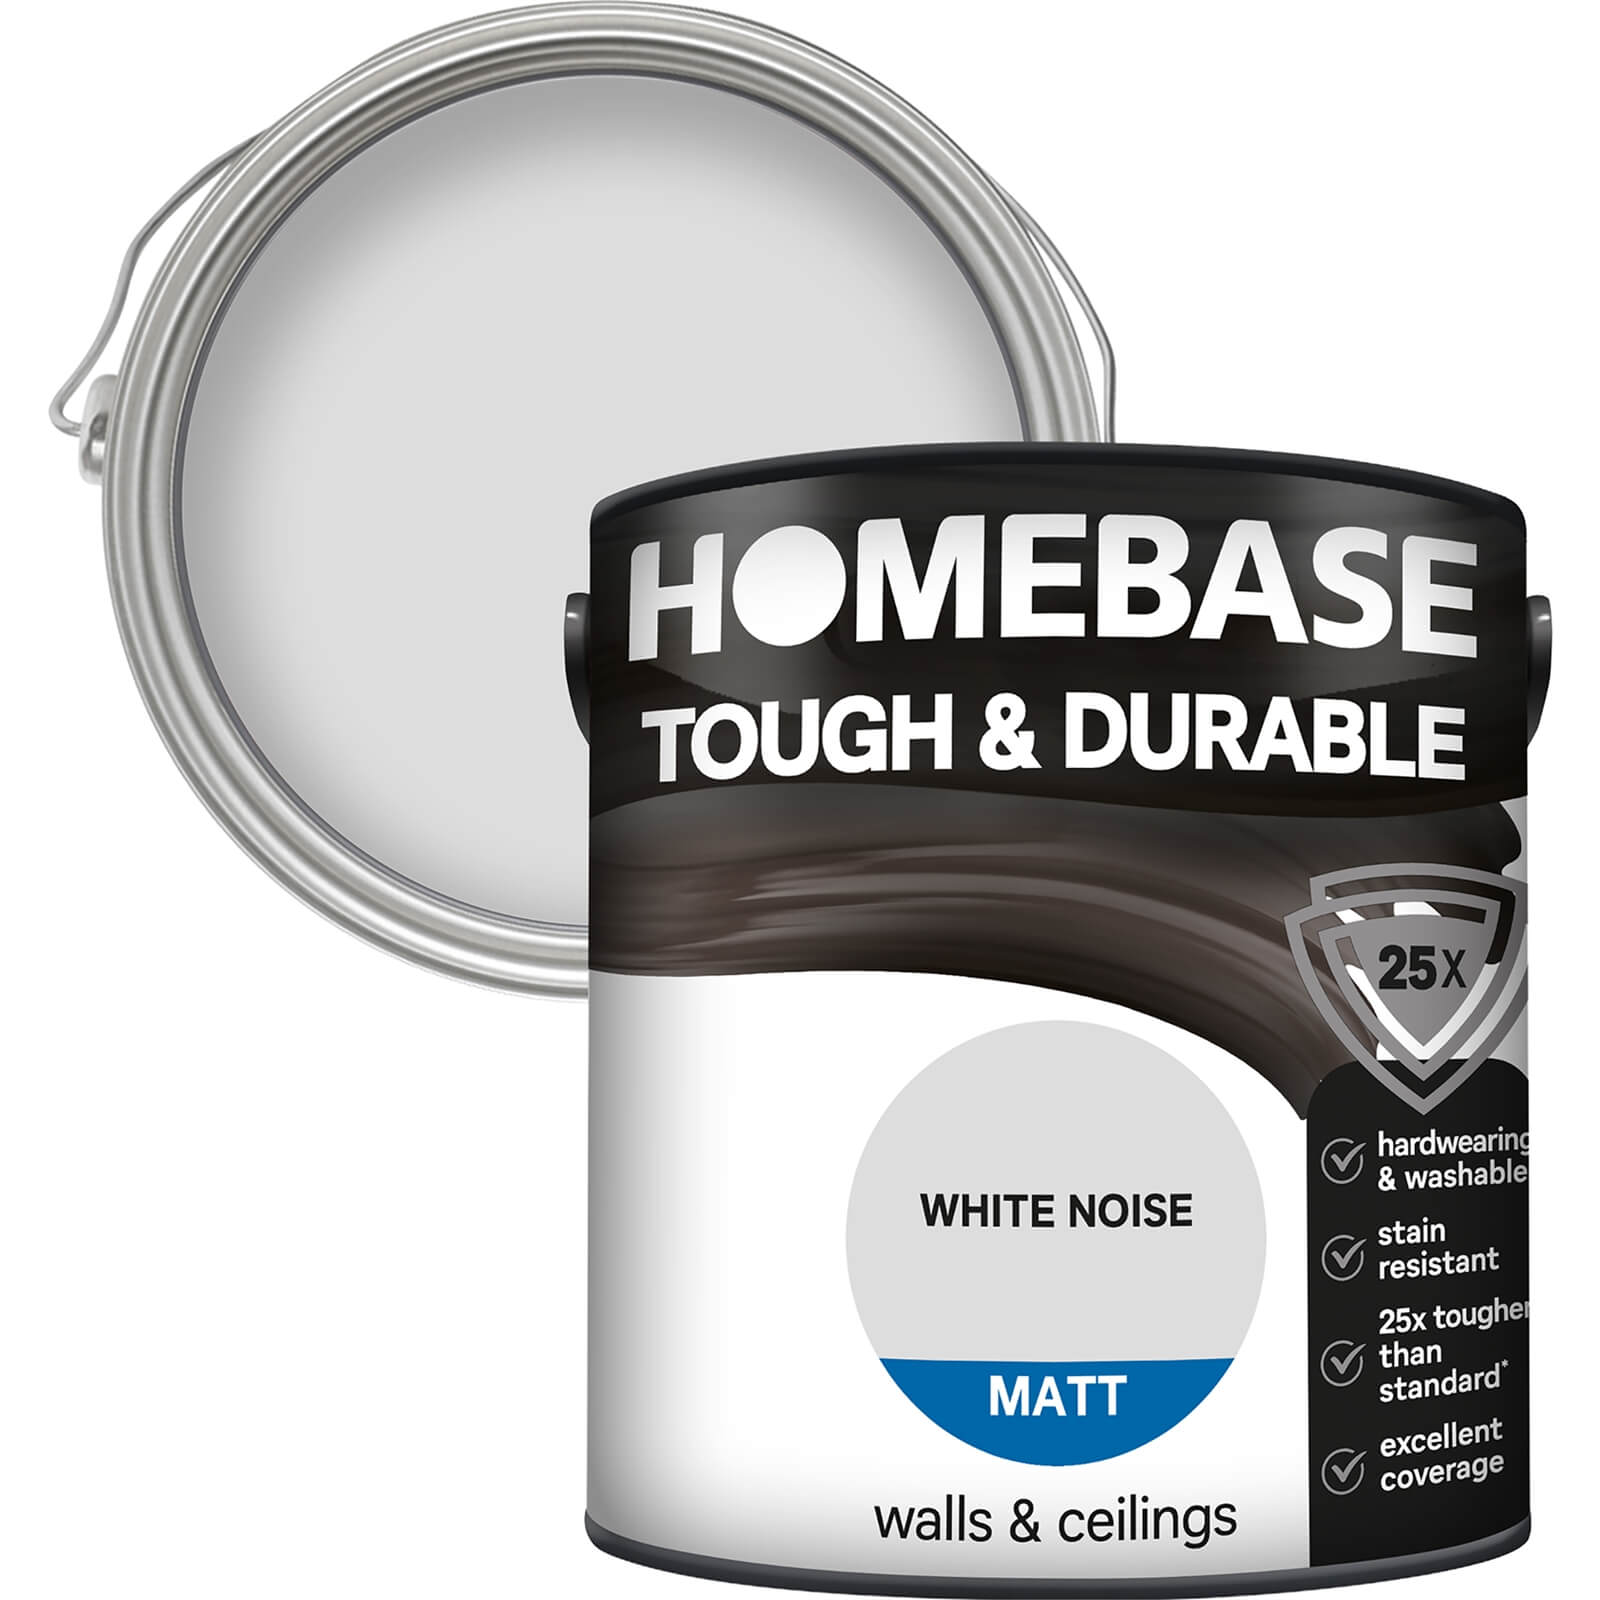 Homebase Tough & Durable Matt Paint White Noise - 2.5L